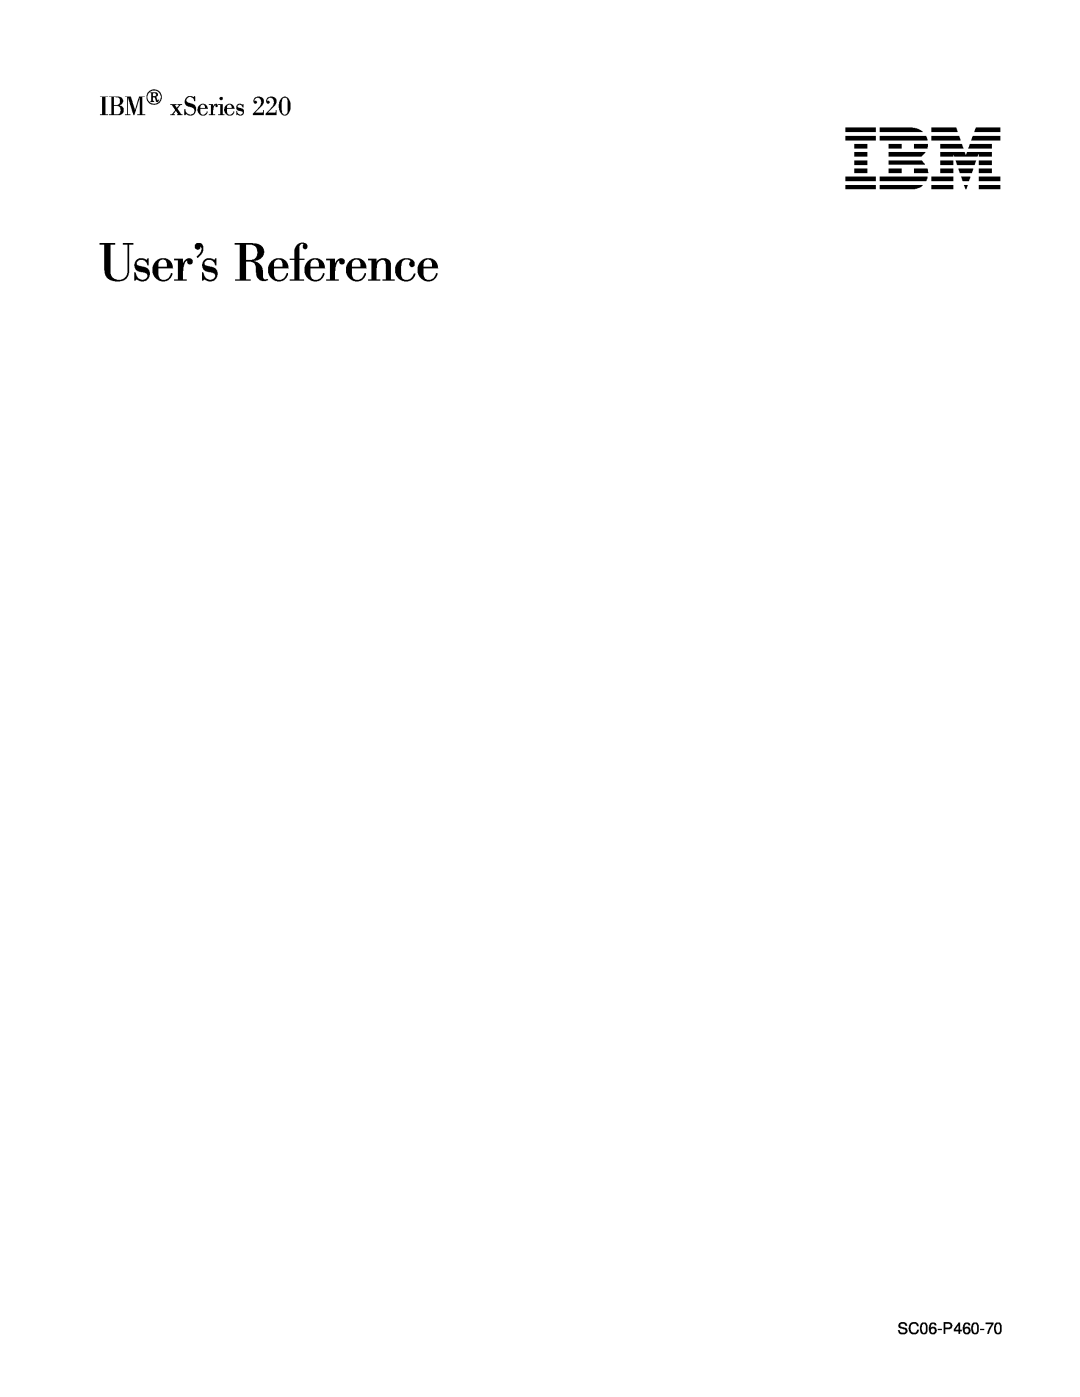 IBM 220 manual User’s Reference, IBM xSeries, SC06-P460-70 